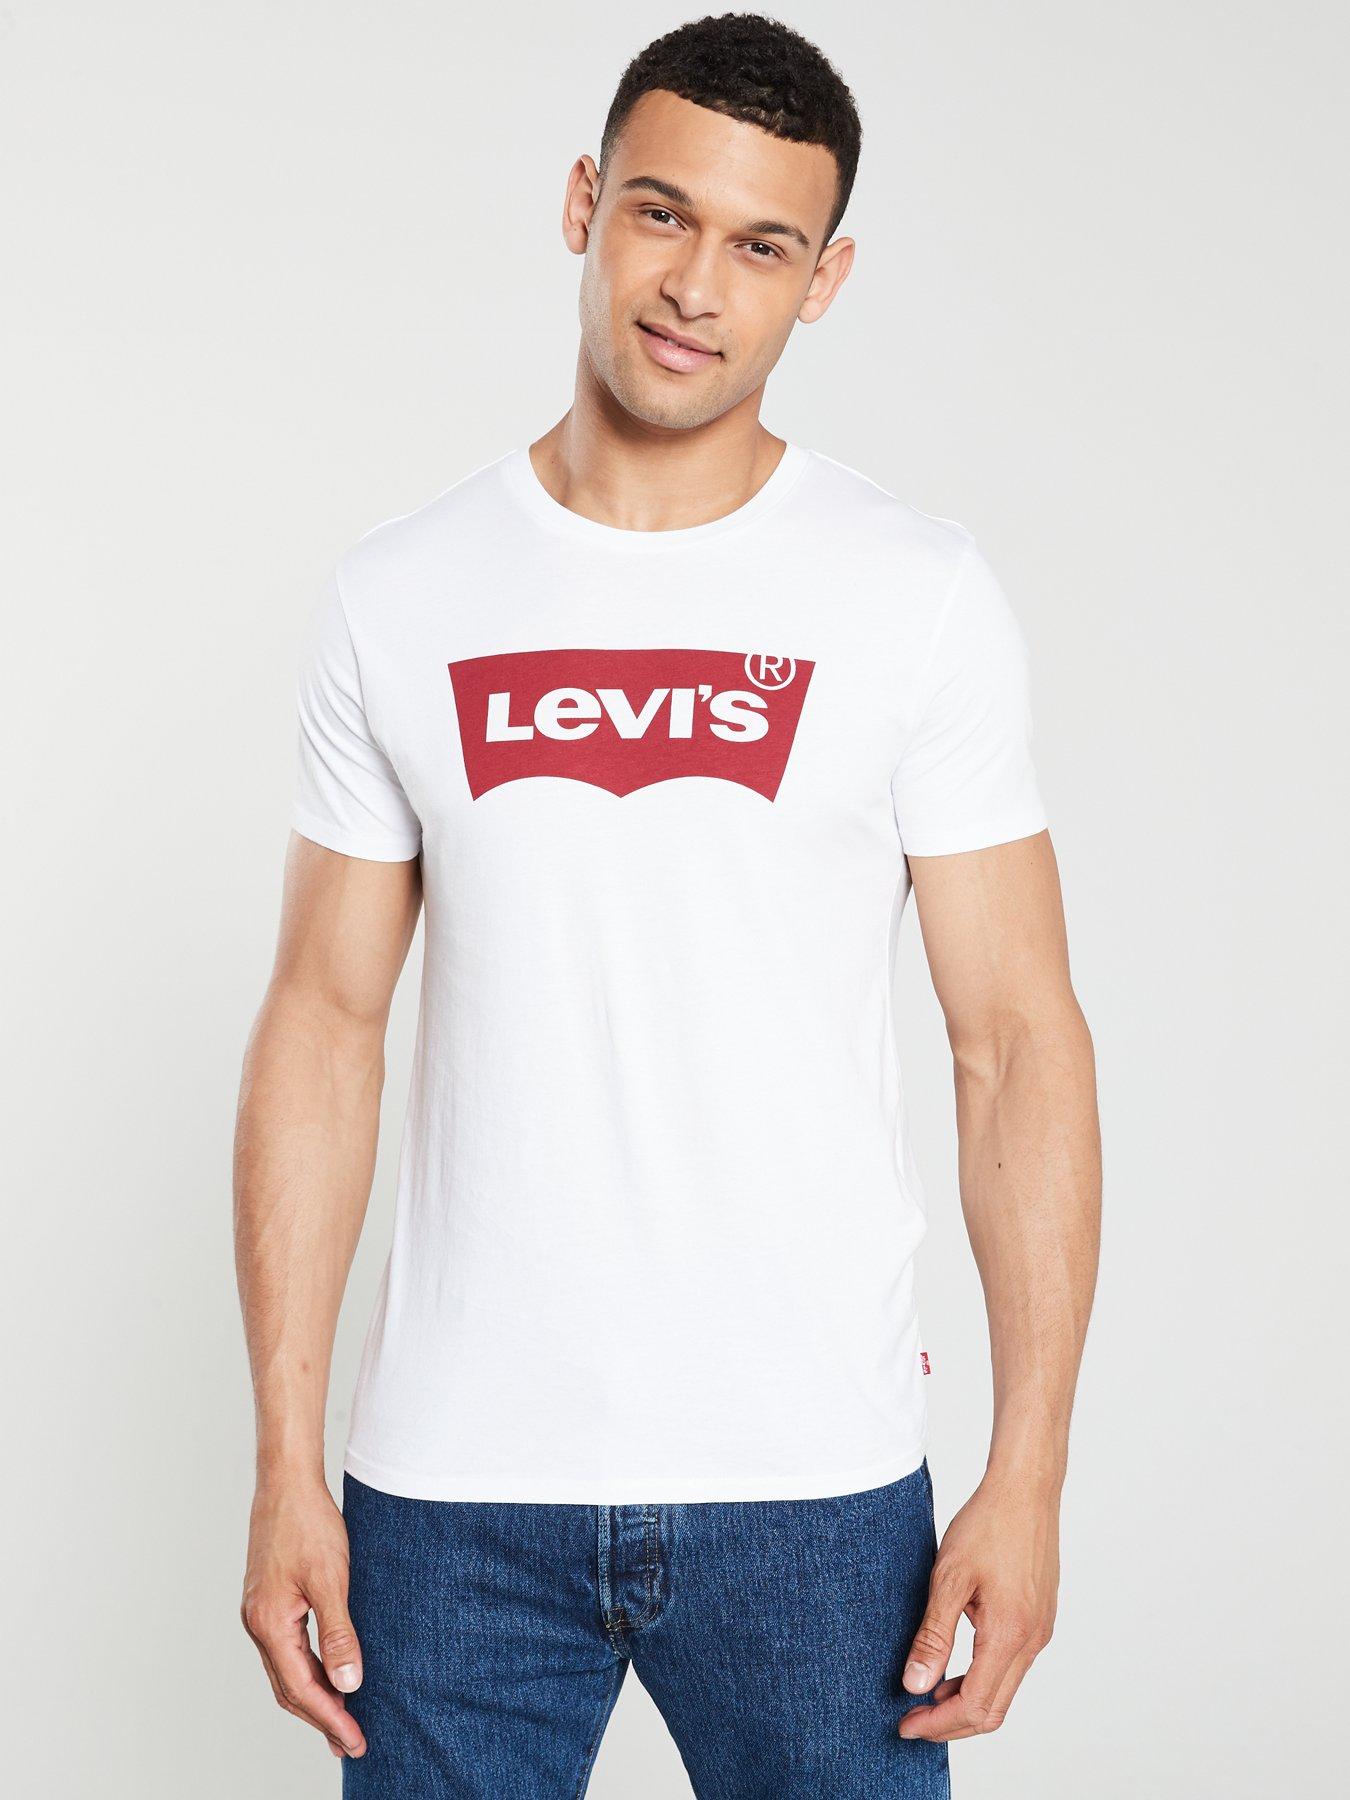 levis white shirt